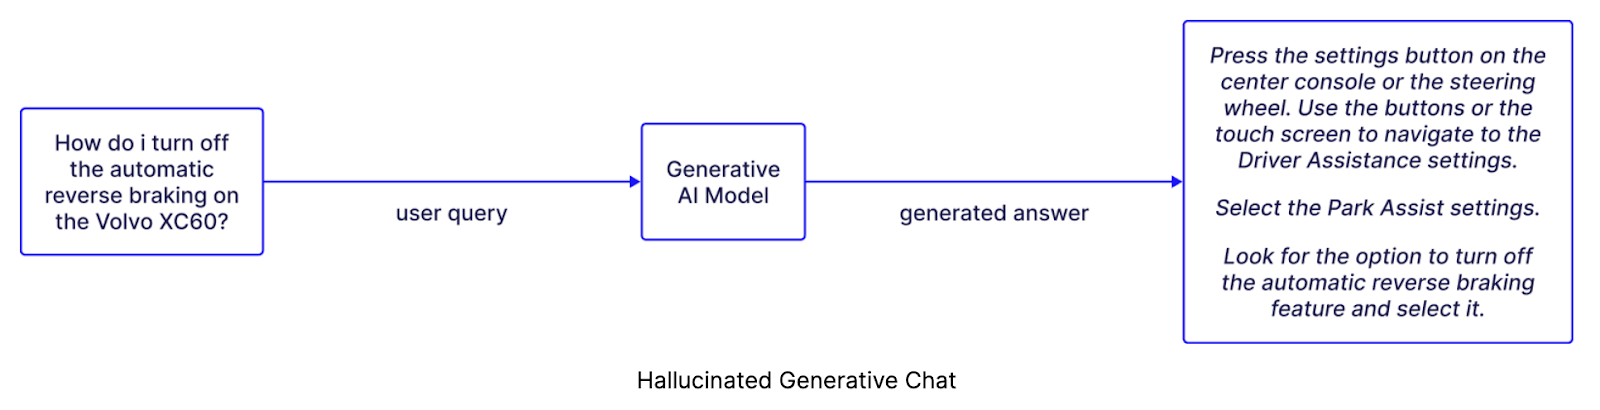 Hallucinated generative AI chat.